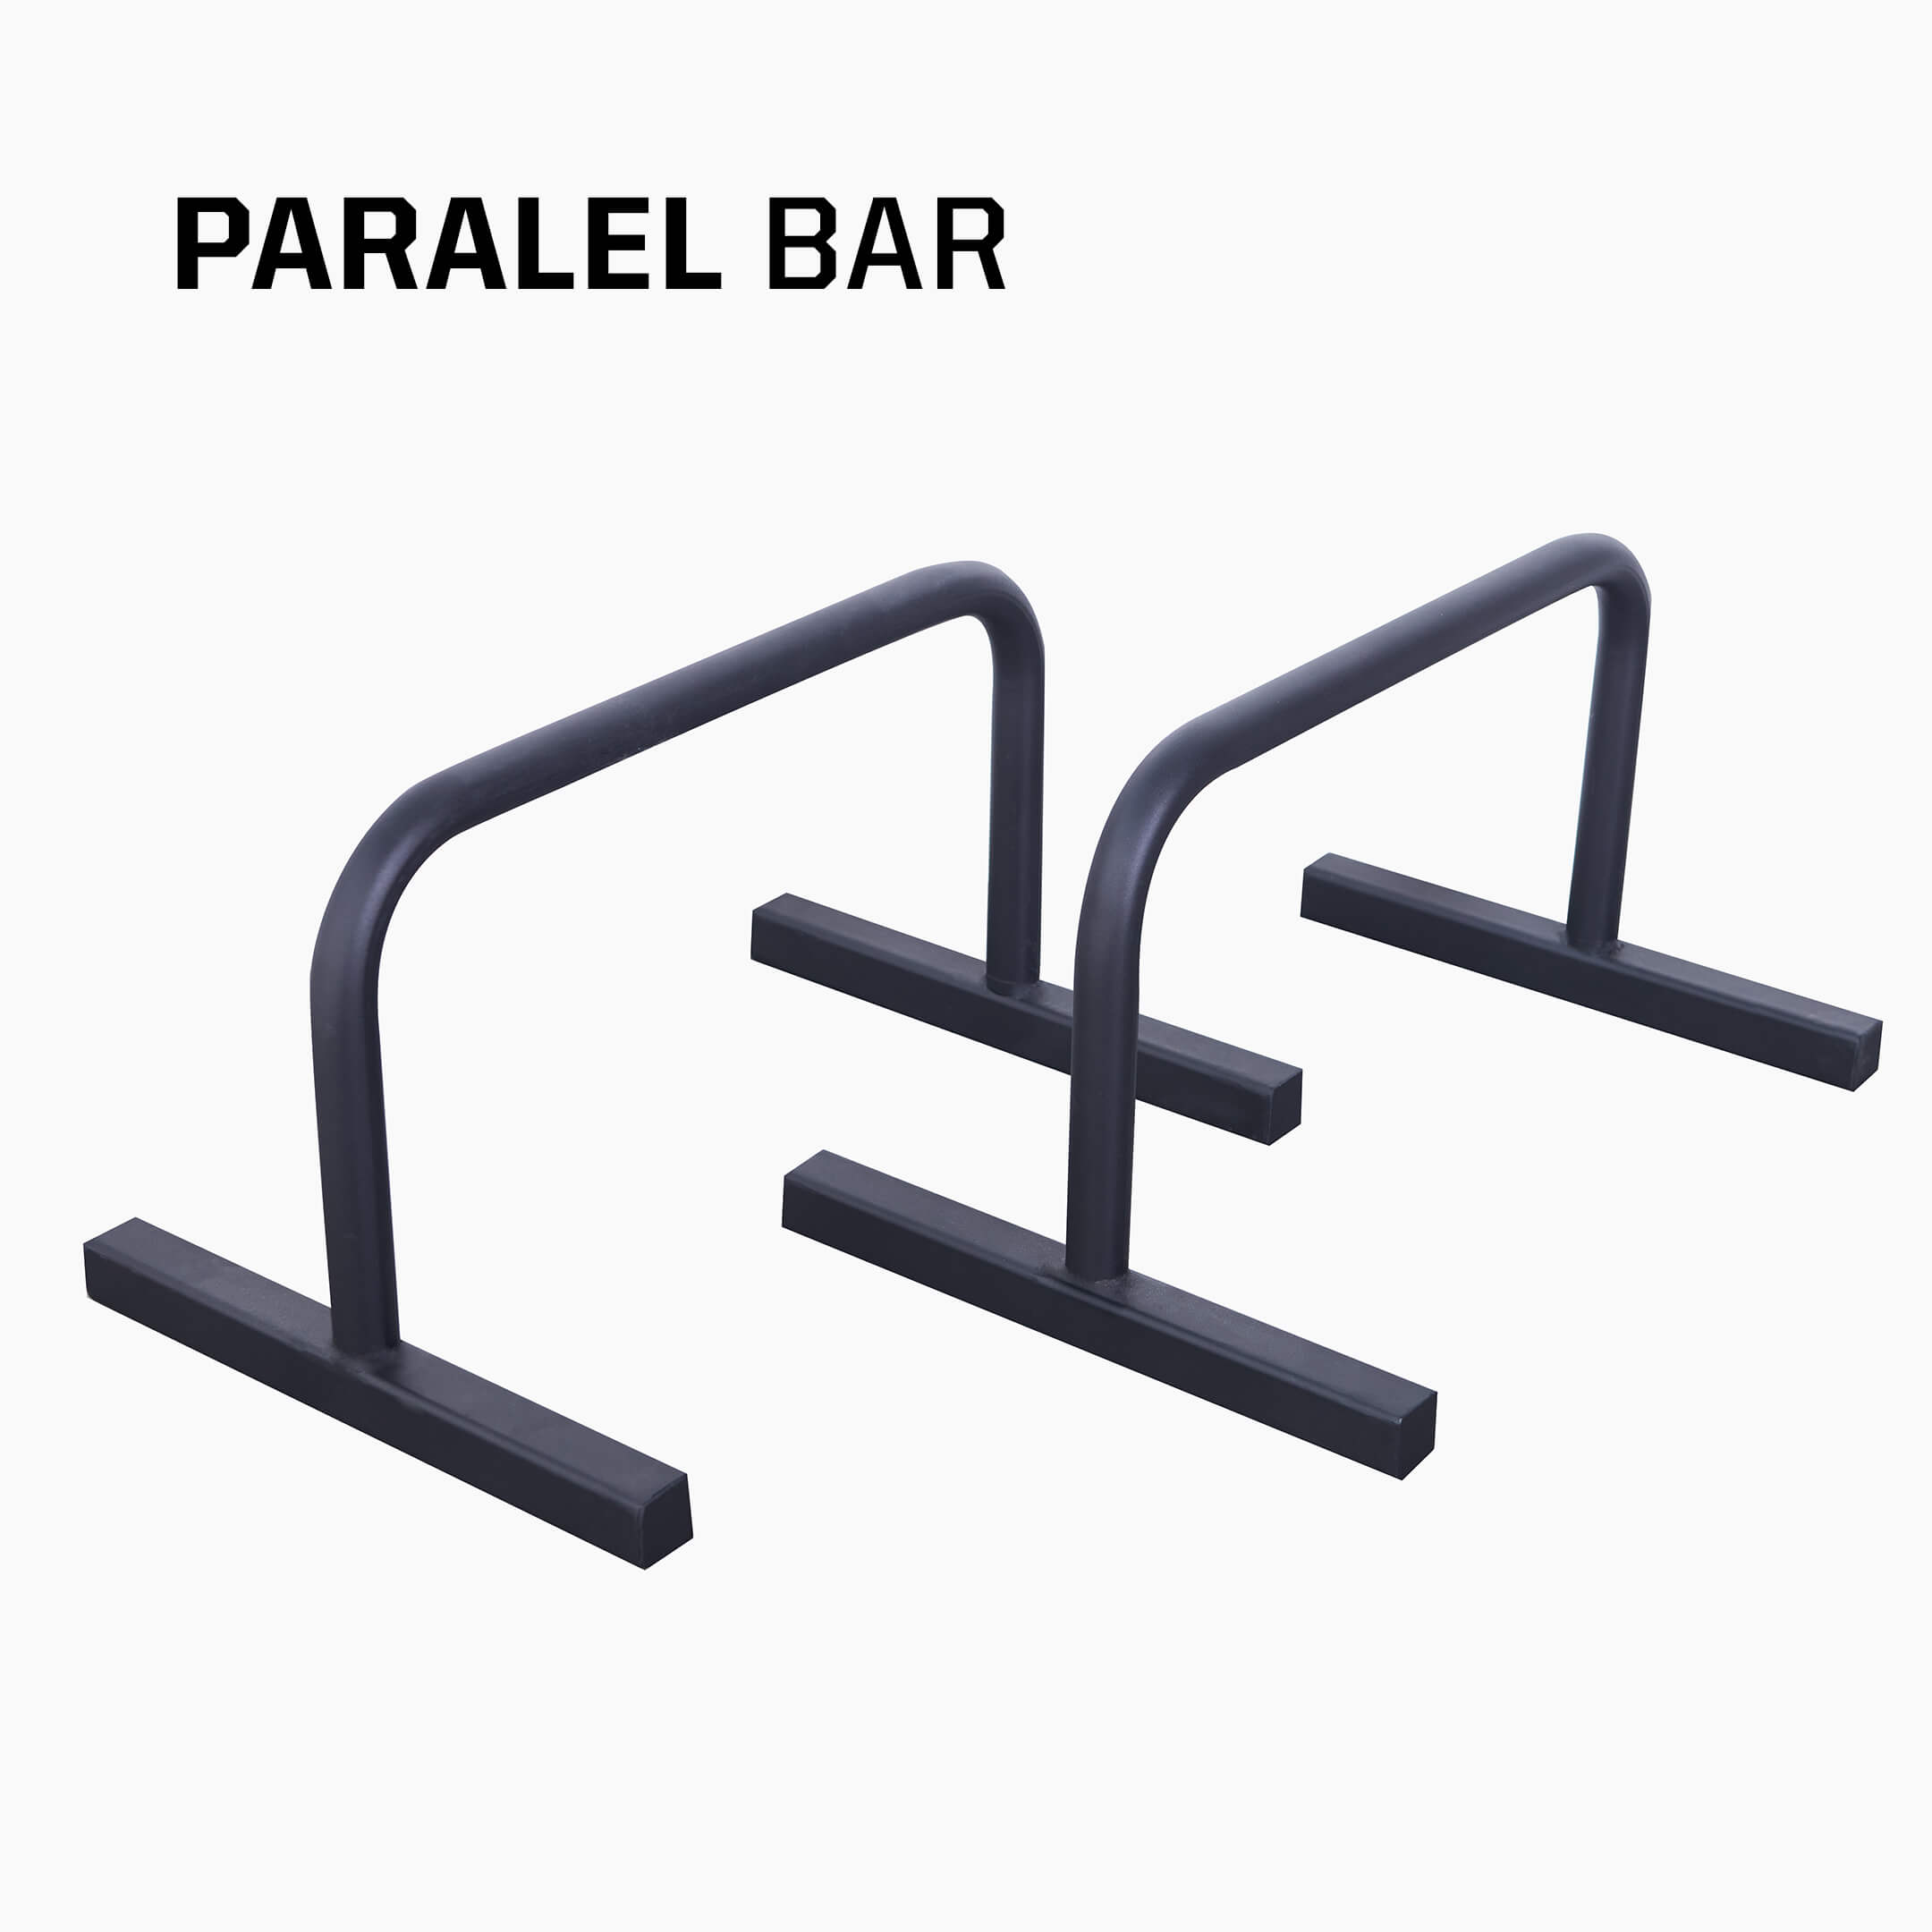 ağırsağlam paralel bar